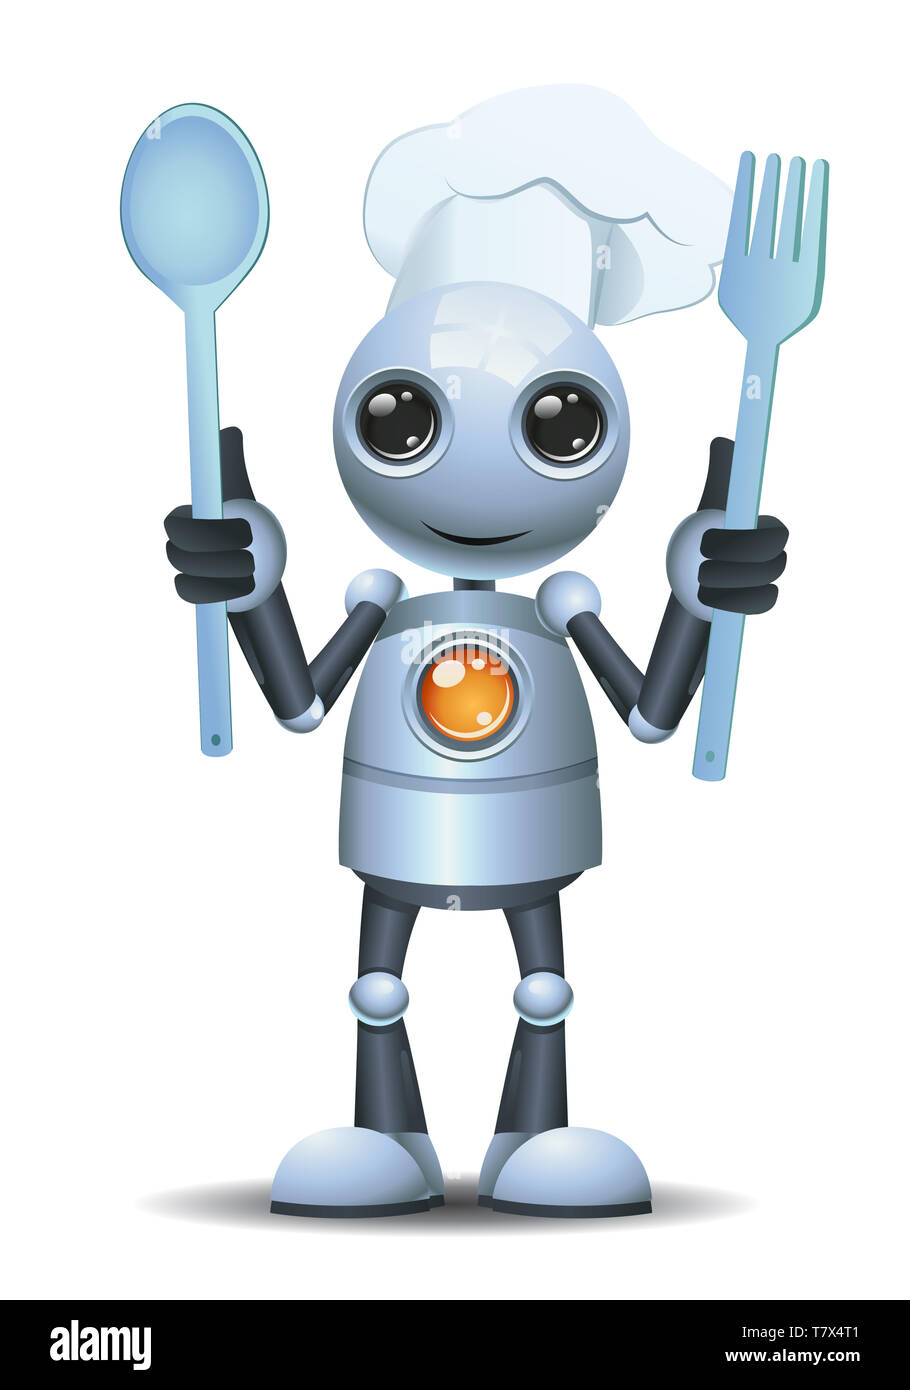 Robot chef Imágenes recortadas de stock - Alamy